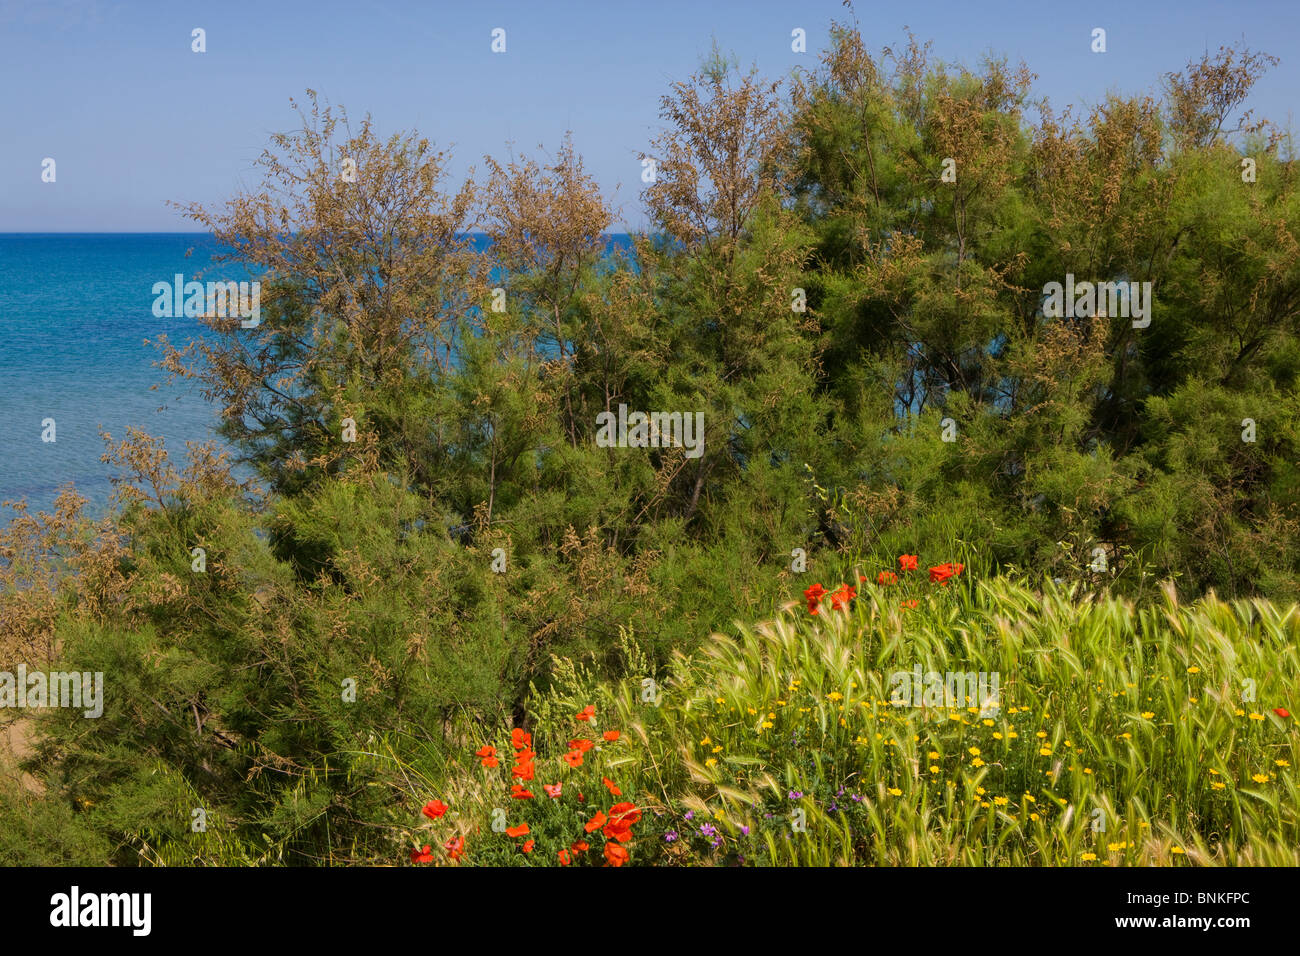 Baratti Italia Toscana golf del golfo de Baratti costa mediterránea arbustos arbustos césped amapola flores Foto de stock